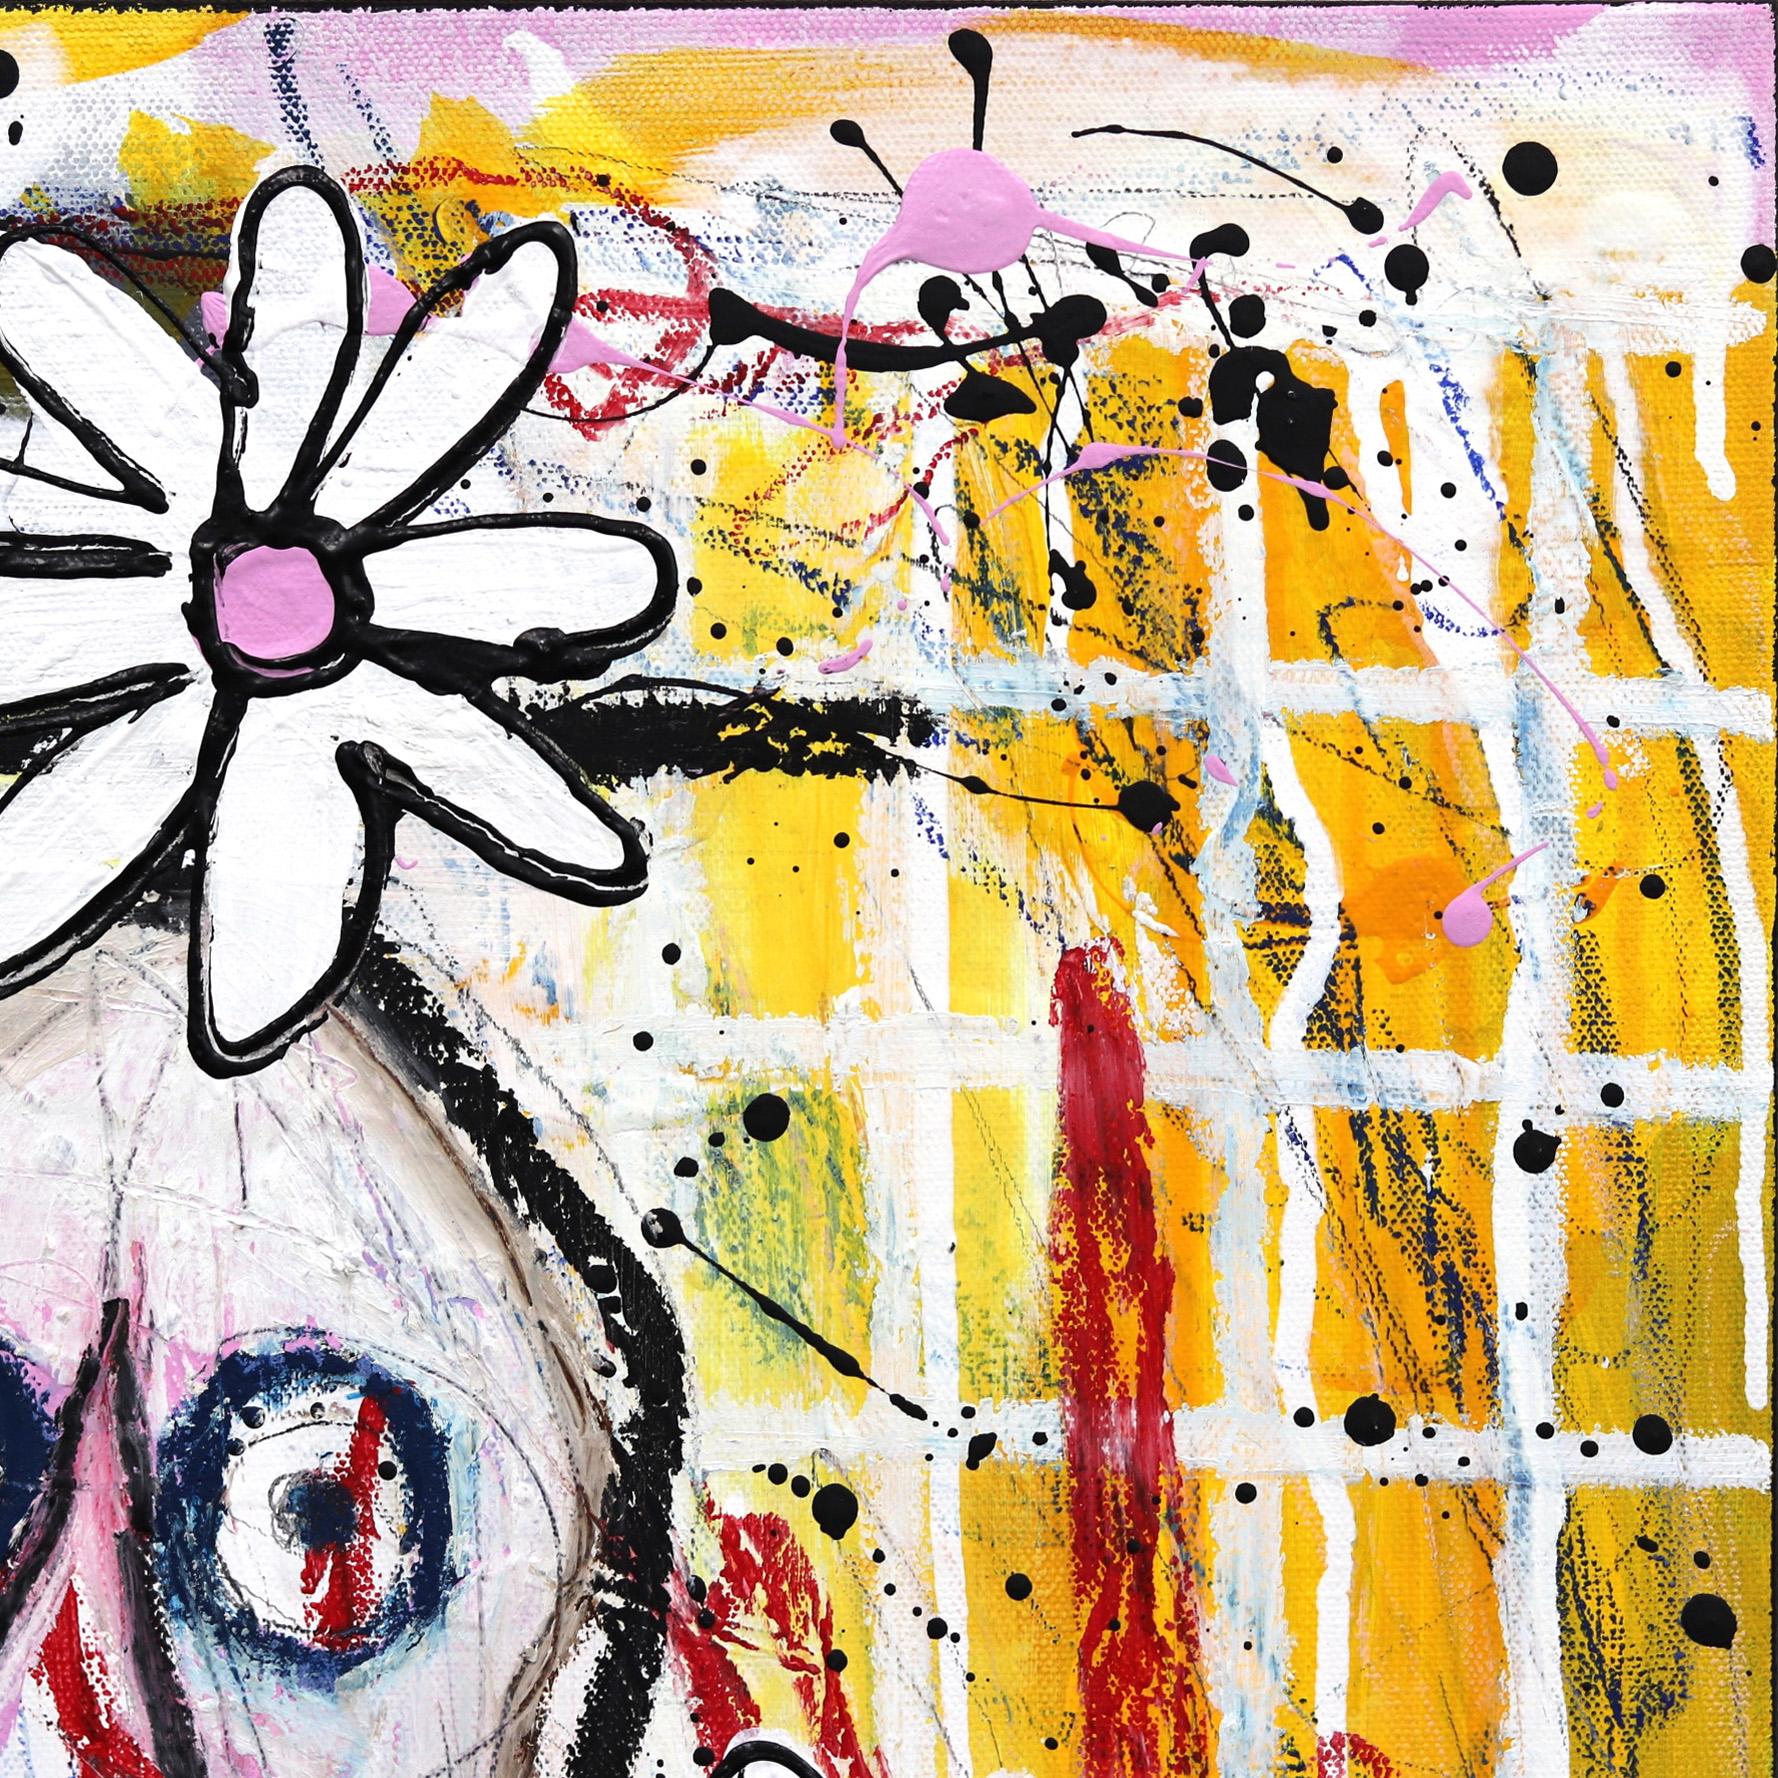 Urban Flowers 3 - Neo-Expressionist Mixed Media Art by Soren Grau